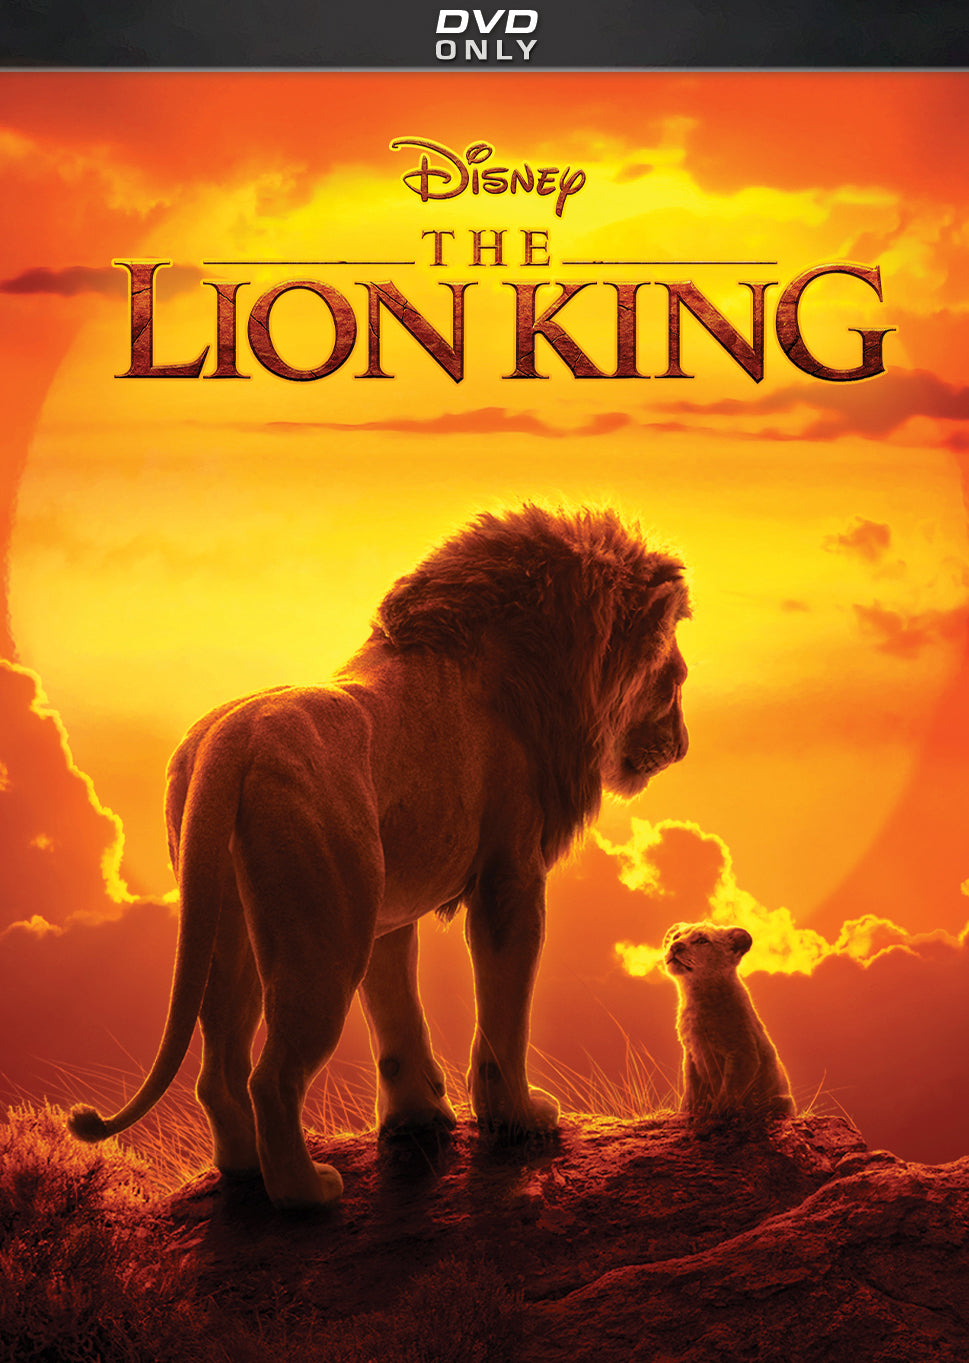 Lion King cover art